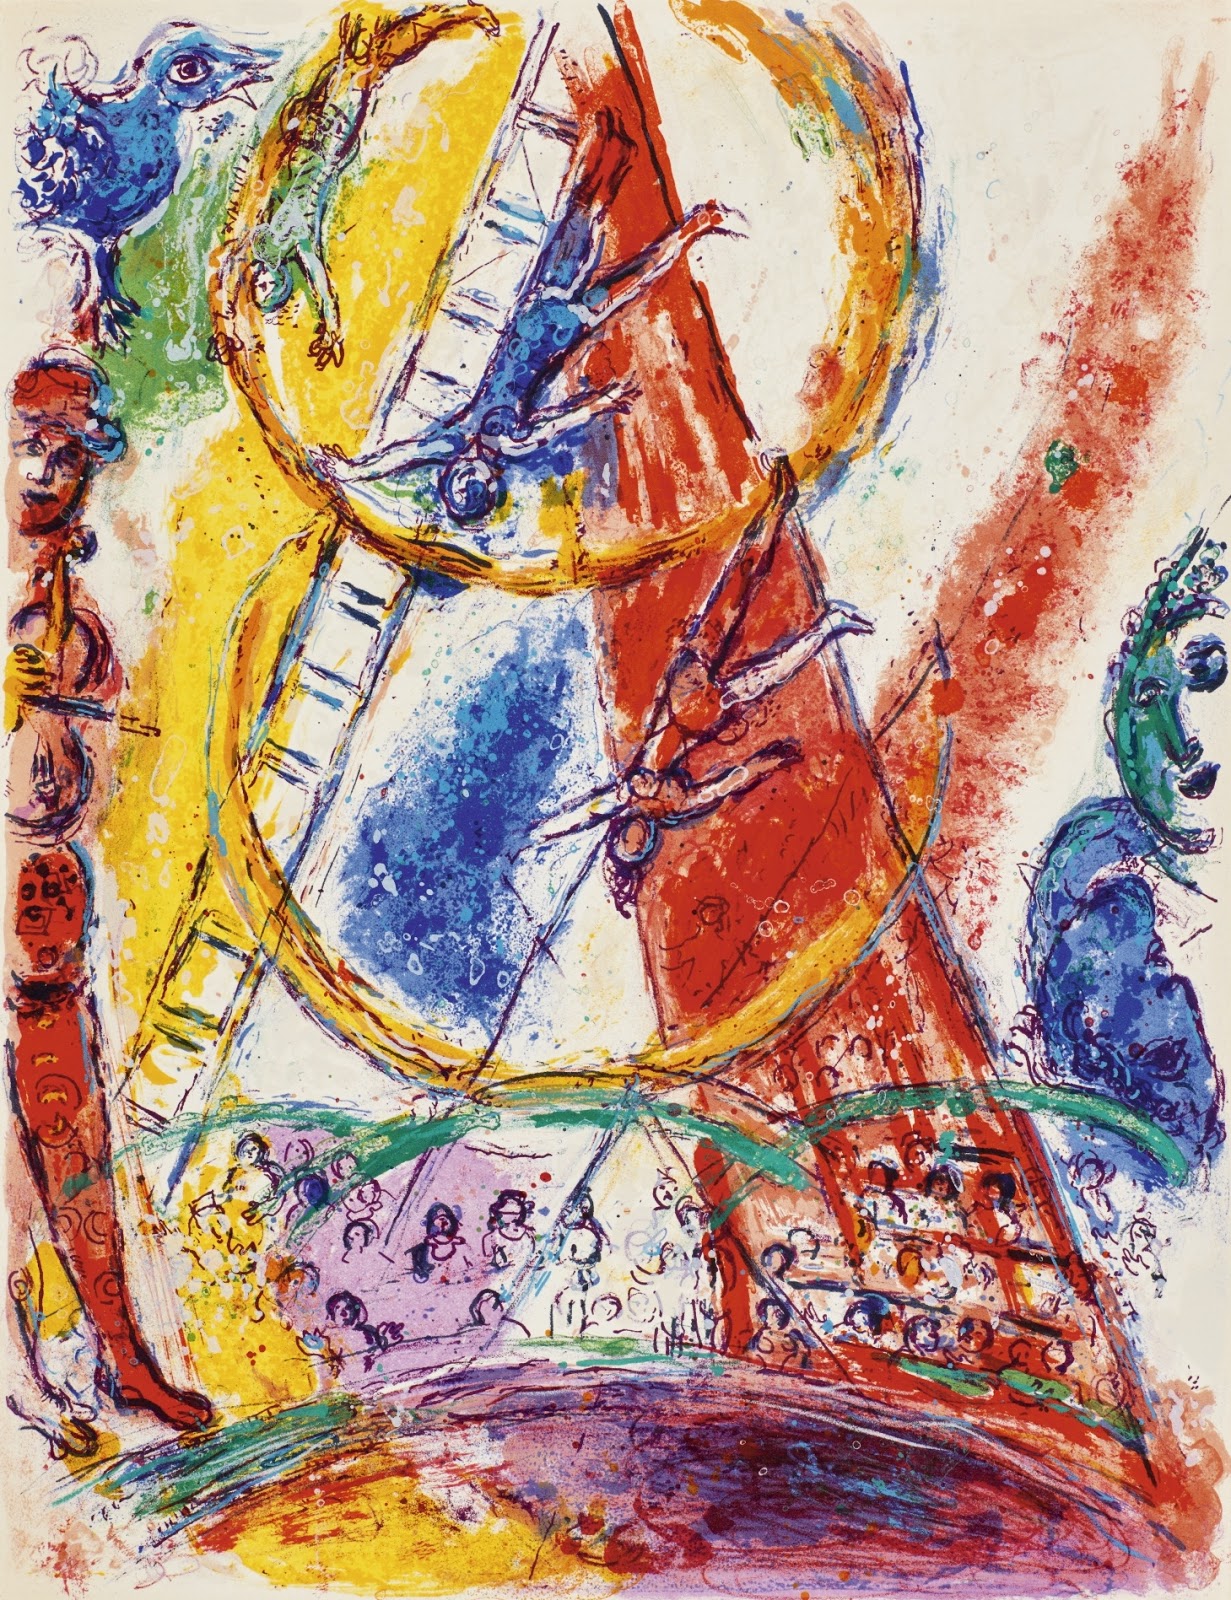 Marc+Chagall-1887-1985 (48).jpg